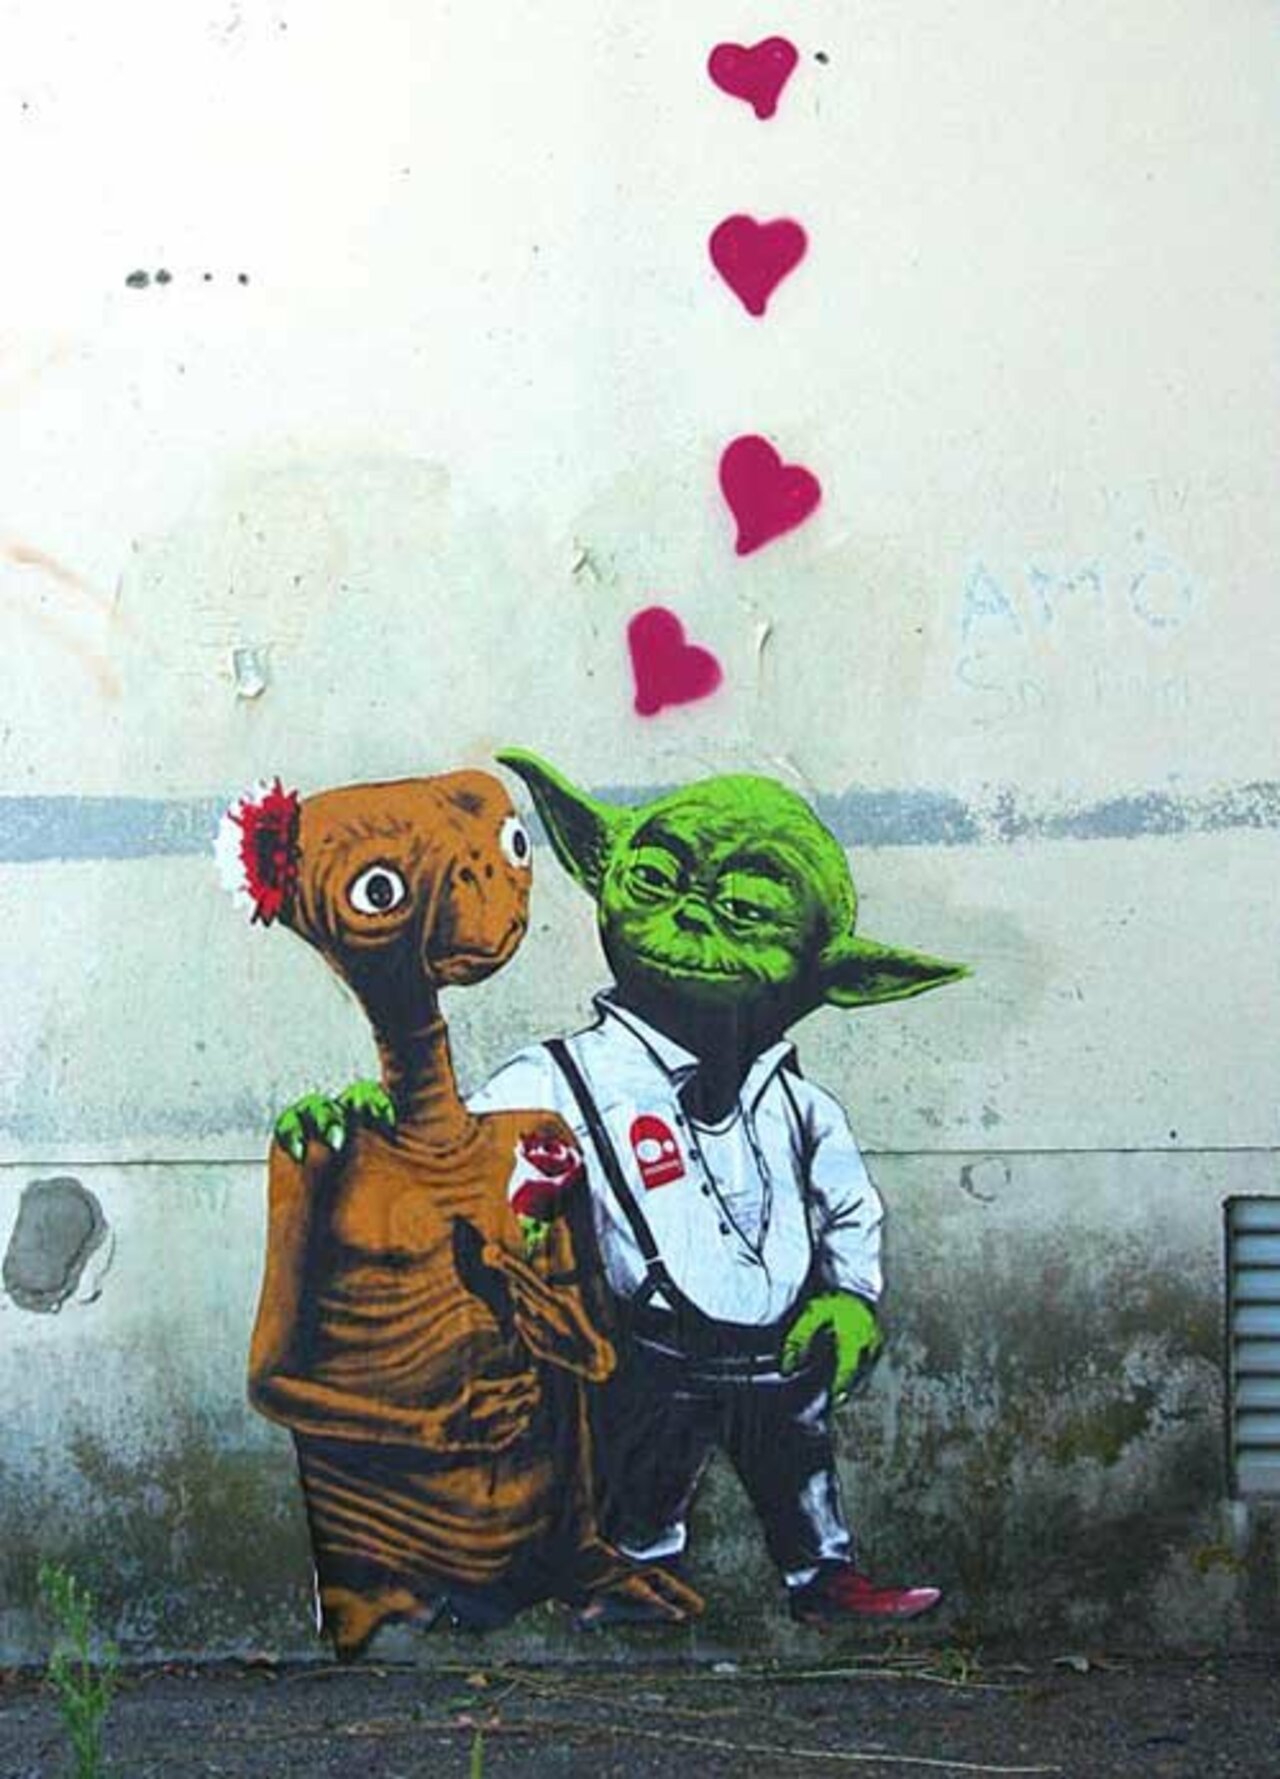 Yoda loves E.T. #journeecontrelhomophobie #Streetart #urbanart #graffiti "All you need is Love" by #artist Zed1 https://t.co/Rs9pBhGyj7